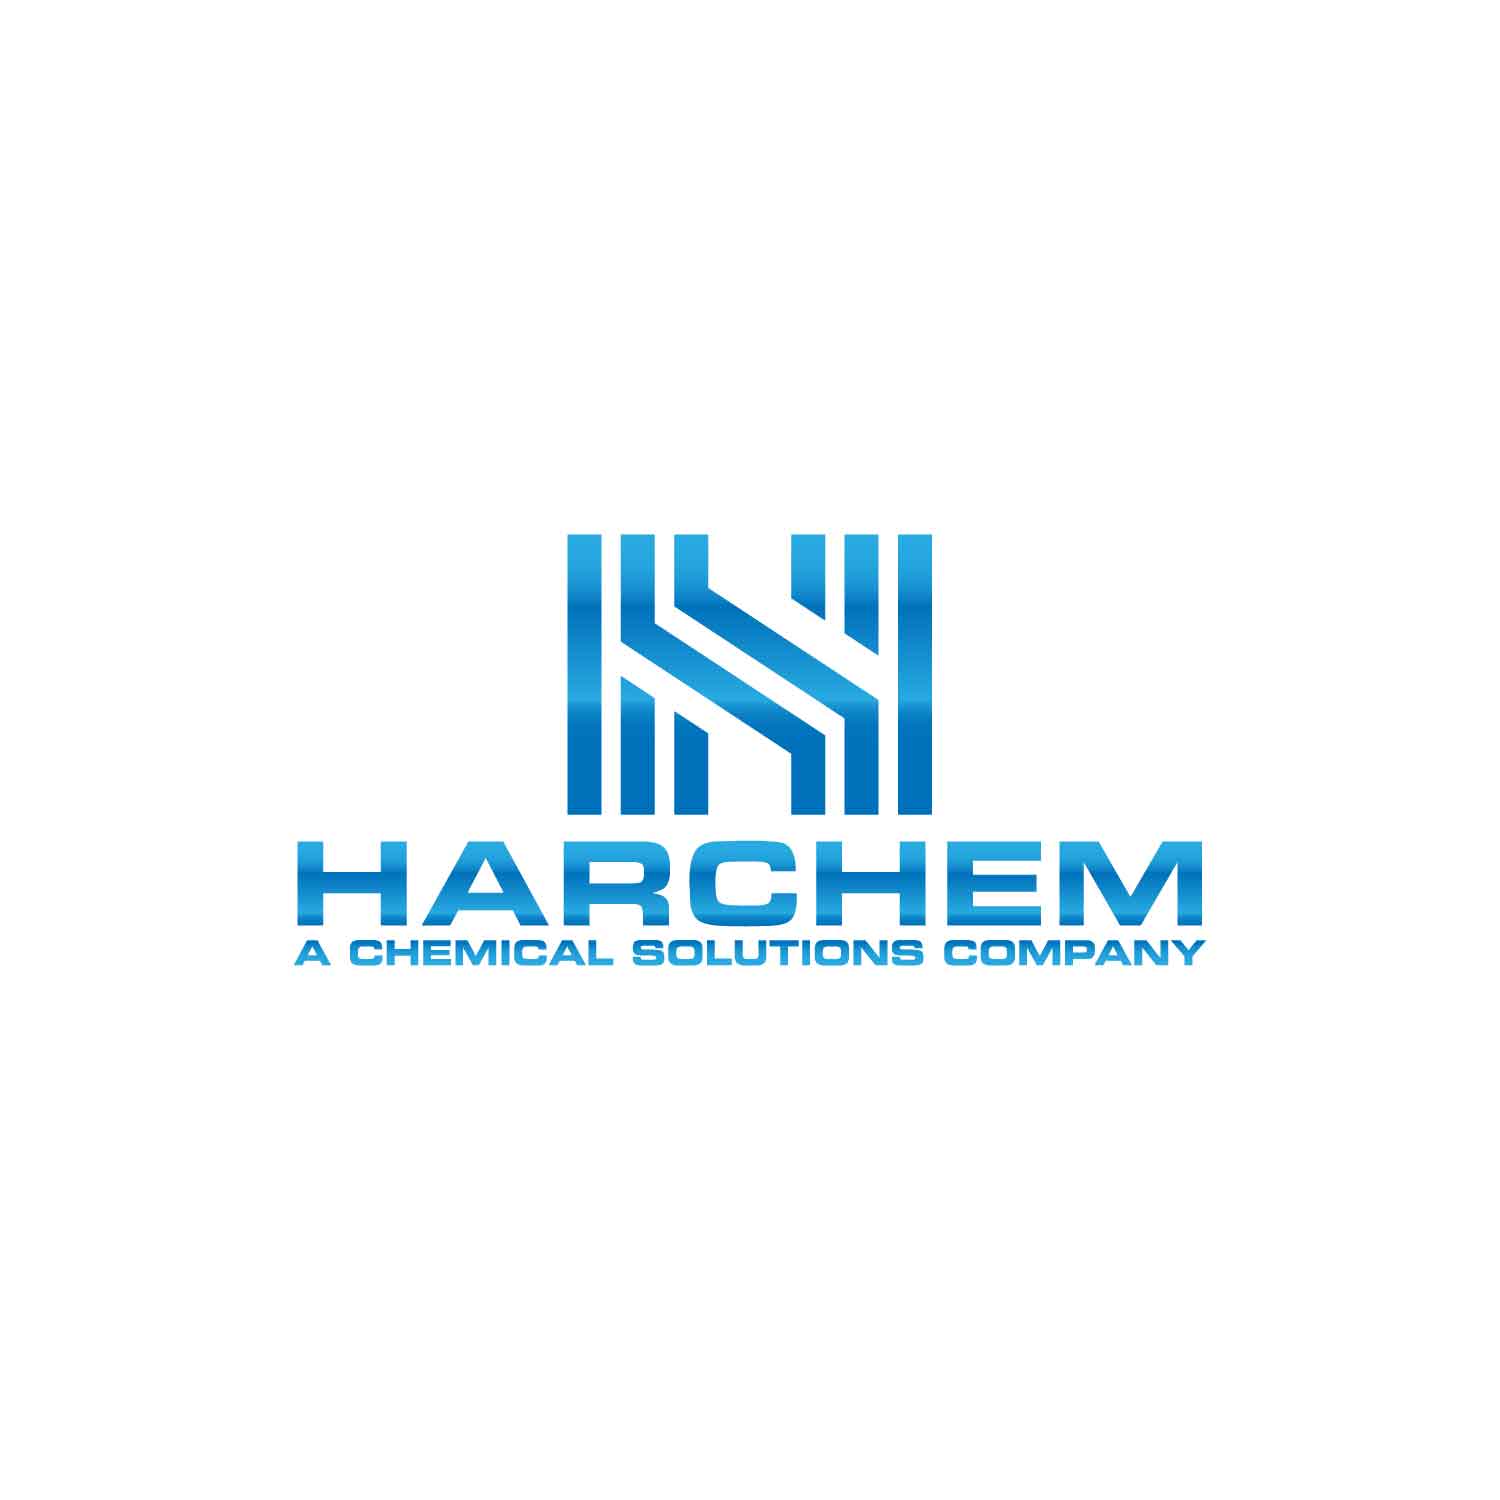 Harchem-01